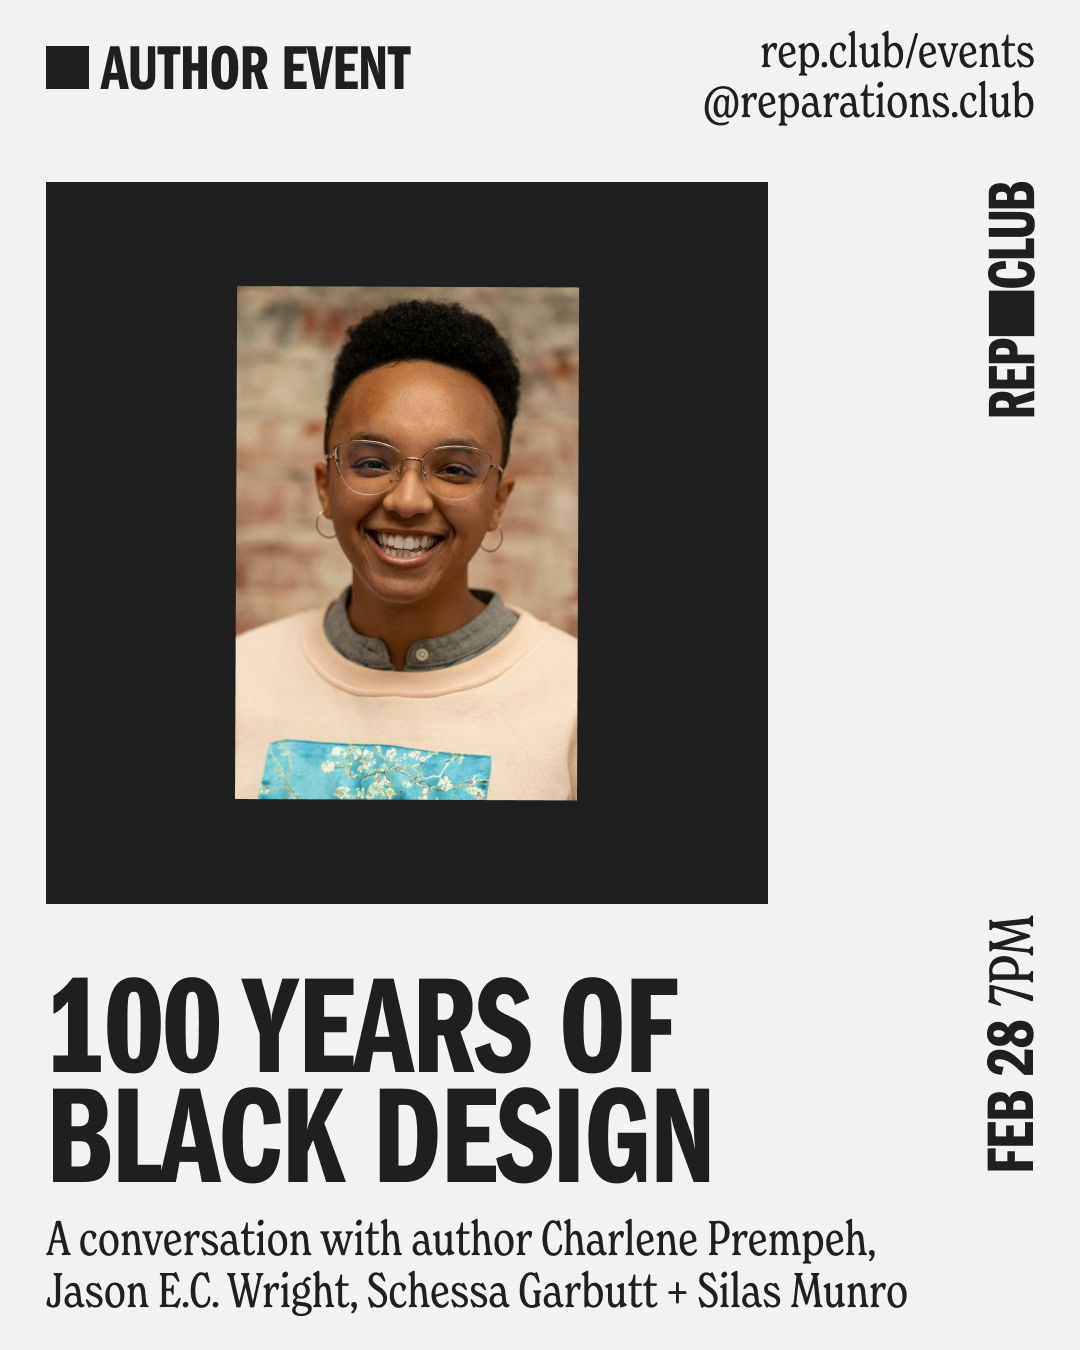 Feb 28th EVENT: Now You See Me // 100 Years of Black Design w/ Charlene Prempeh, Jason E.C. Wright, Schessa Garbutt, + Silas Munro